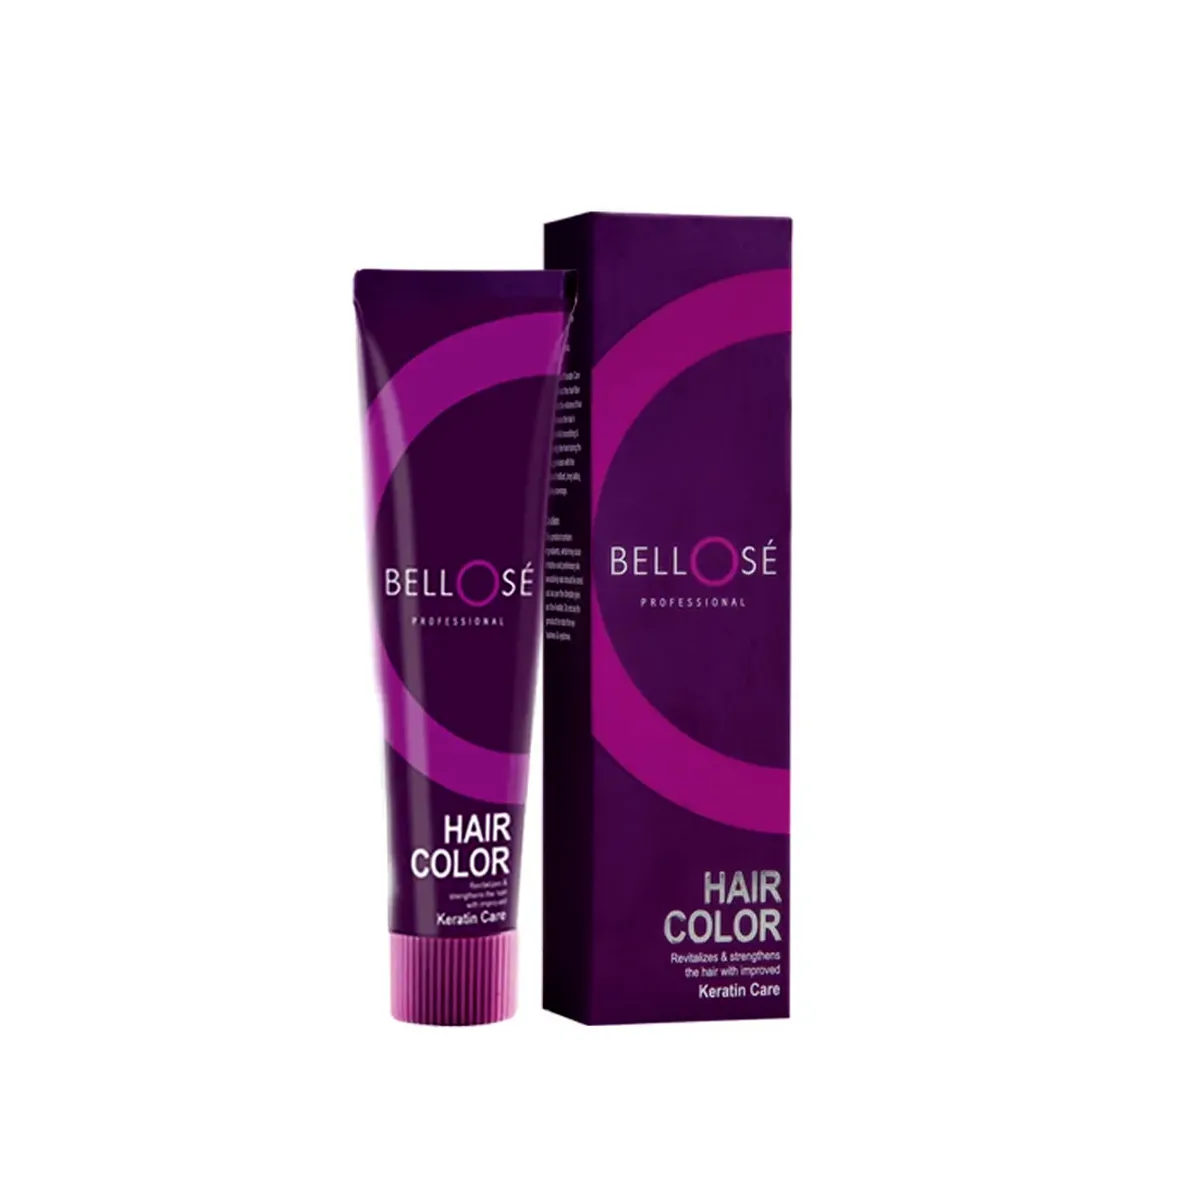 Bellose Hair Color 1.0 30ml